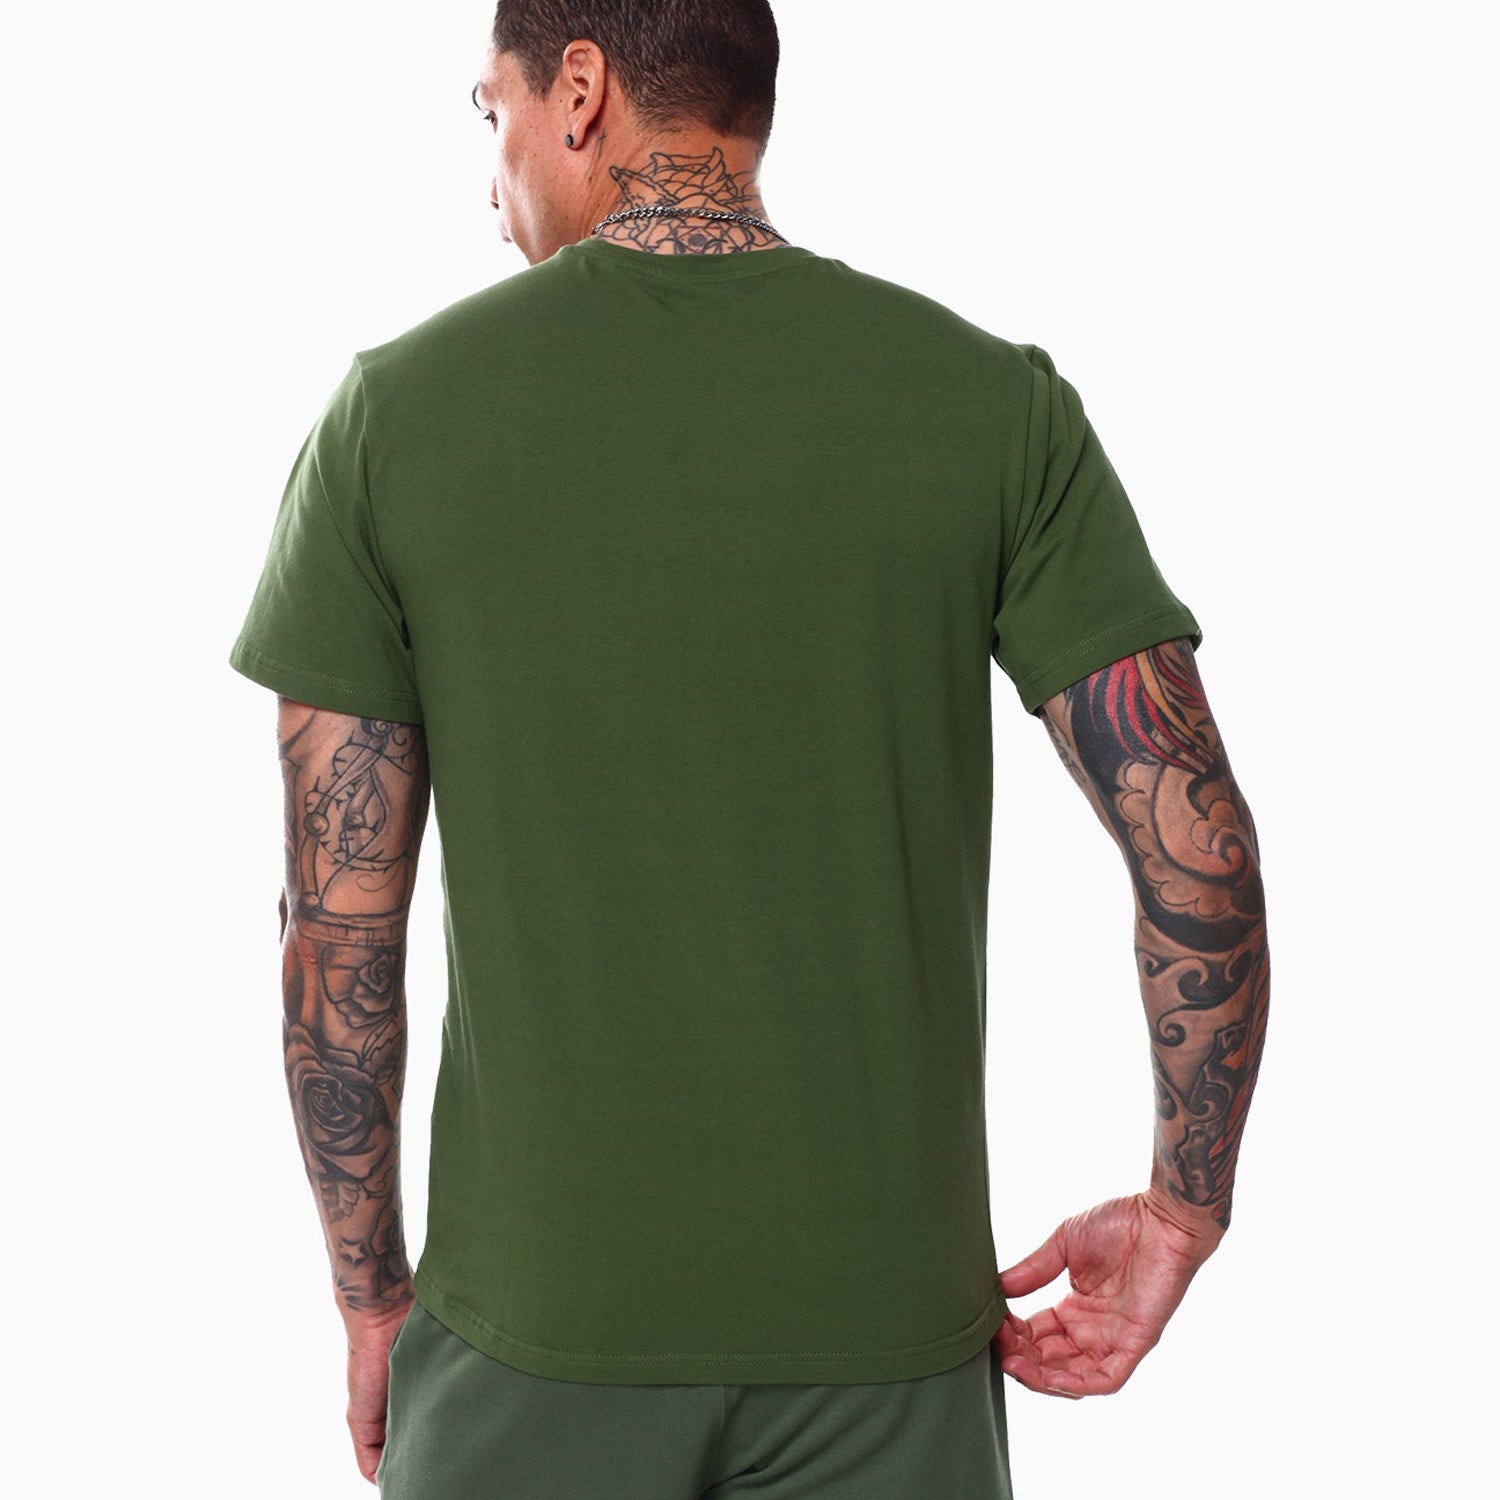 top-gun-mens-embroidered-logo-t-shirt-and-shorts-outfit-tgm2301-green